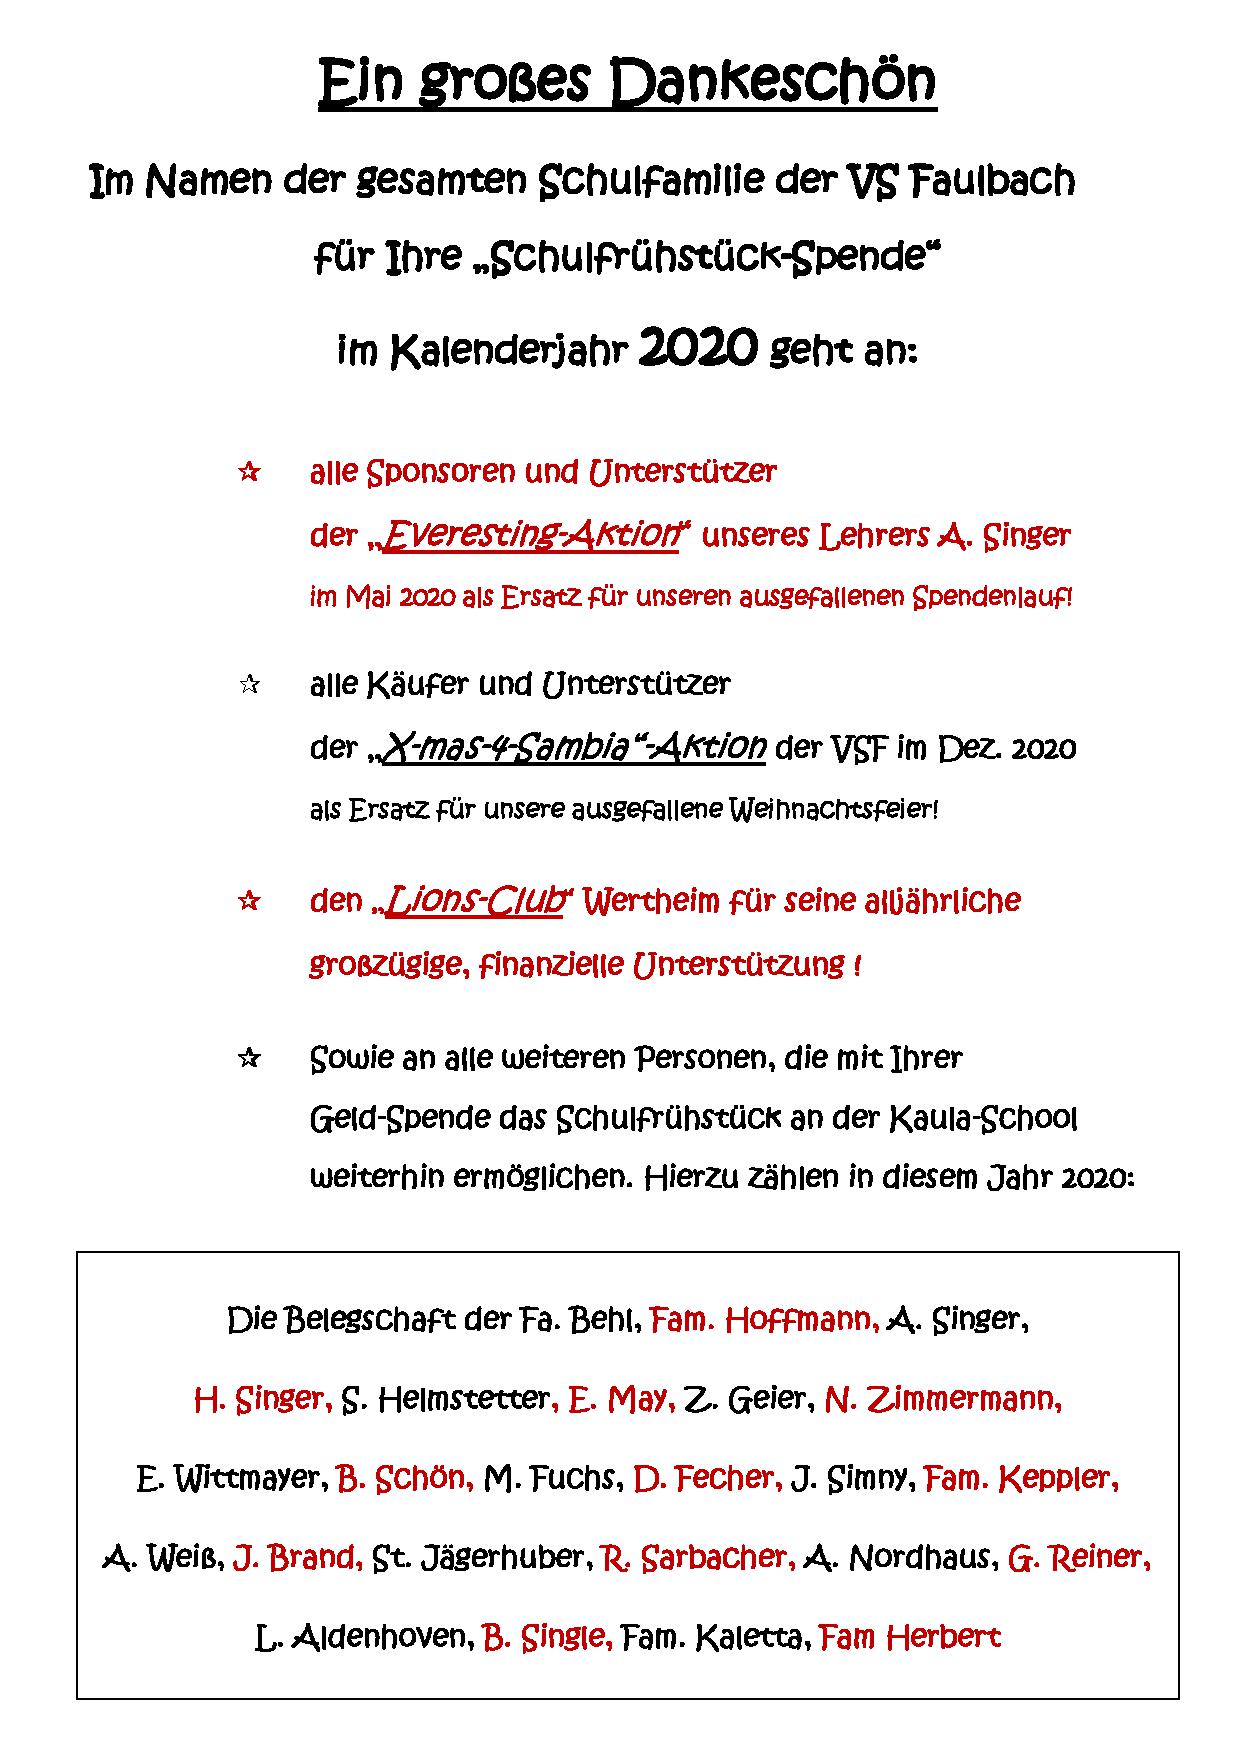 DANKESCHÖN_2020_-_homepage_an_SCHULFRÜHSTÜCK_-_SAMBIA_II_pdf-2.jpg